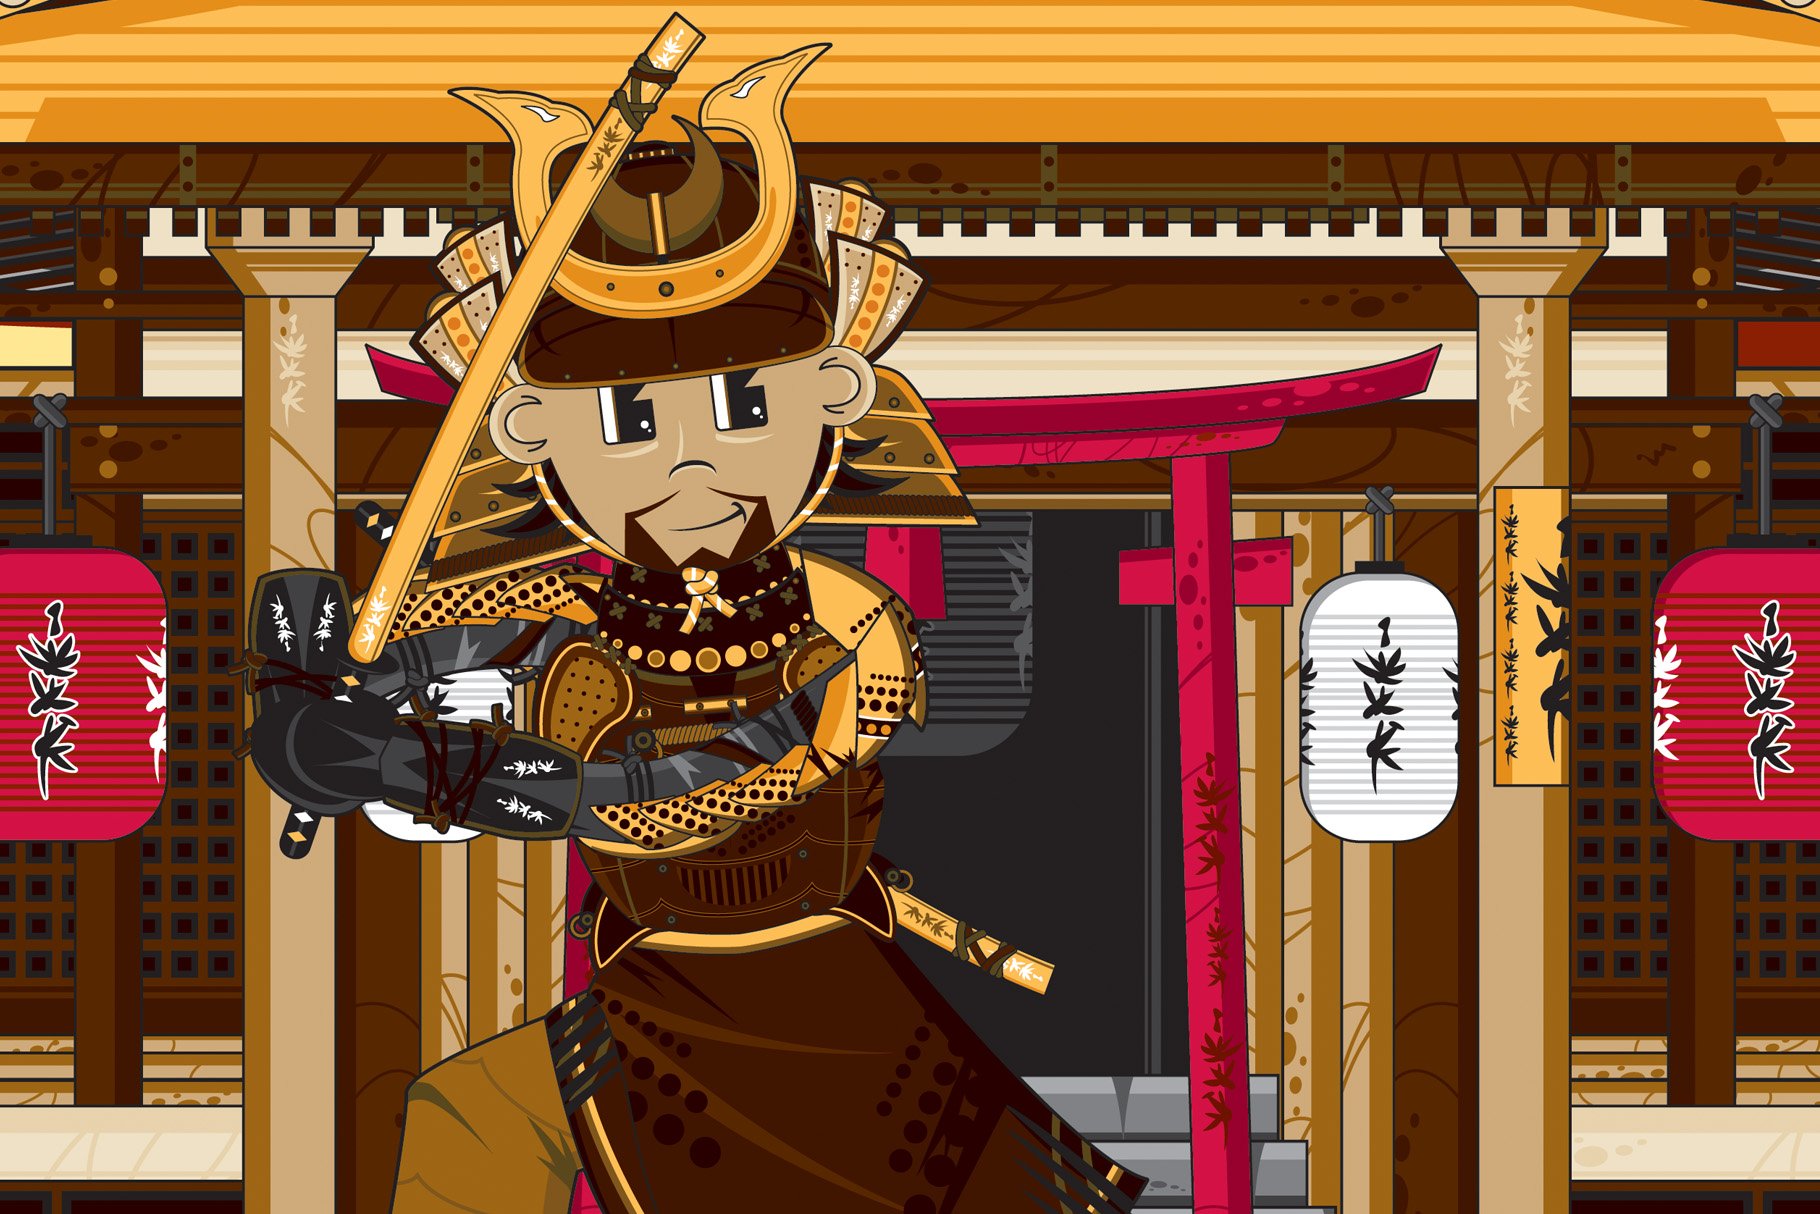 Fierce Samurai Warrior at Temple preview image.